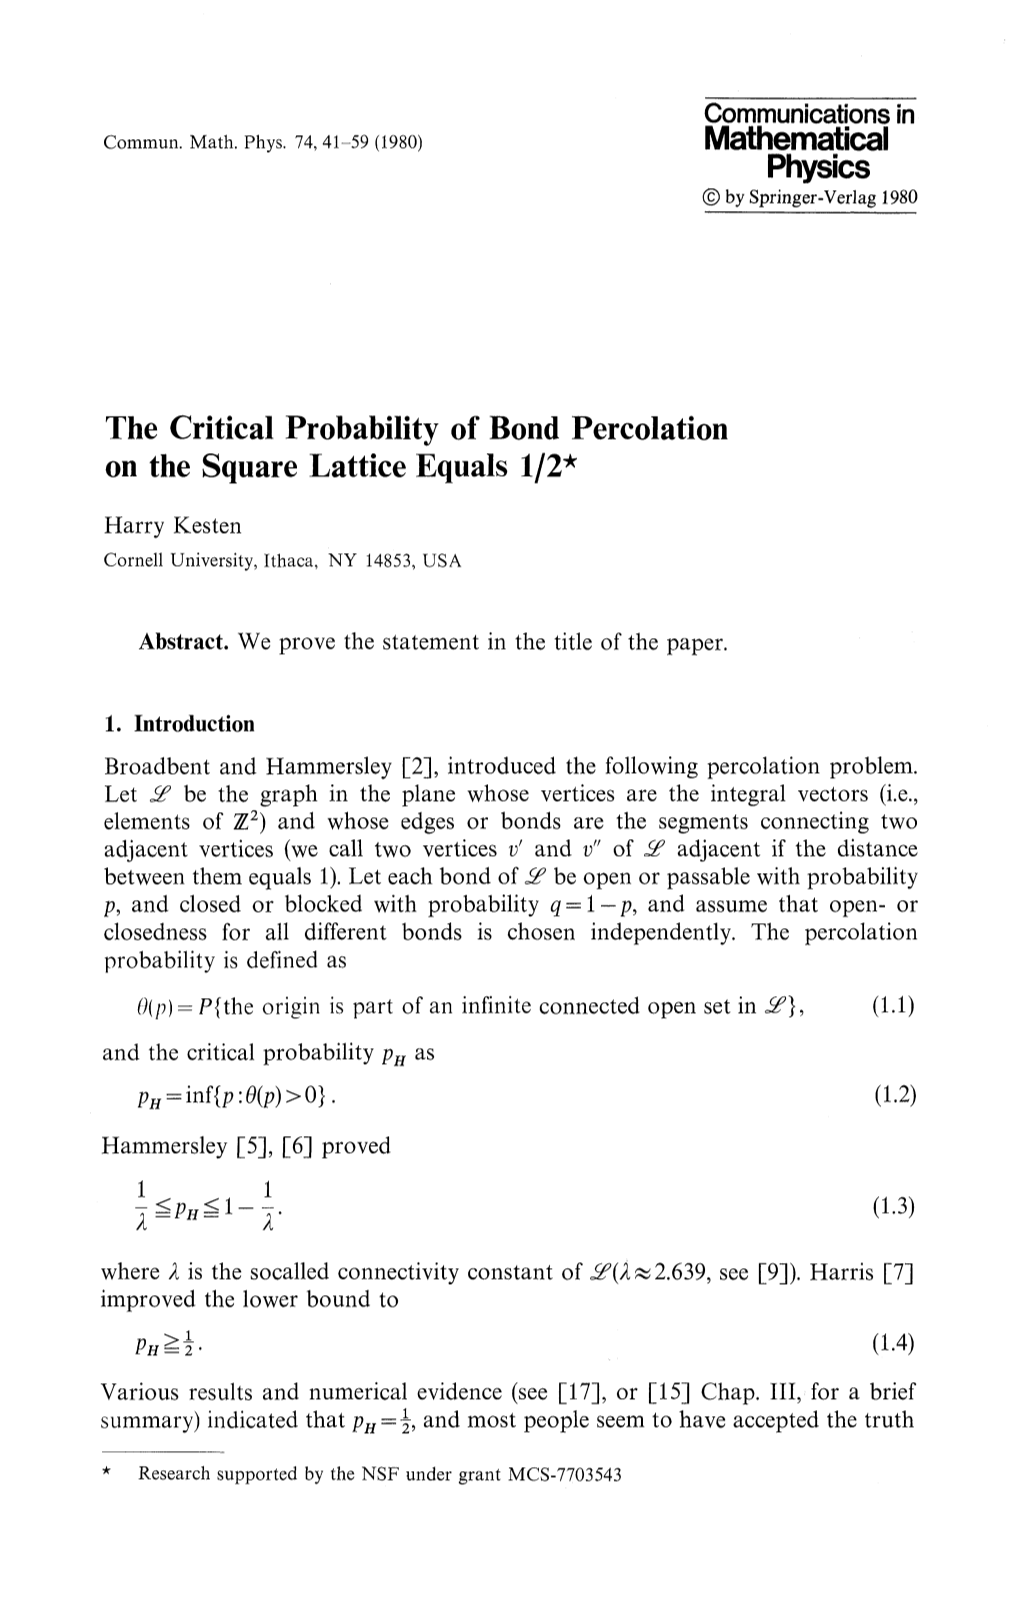 The Critical Probability of Bond Percolation on the Square Lattice Equals 1/2*